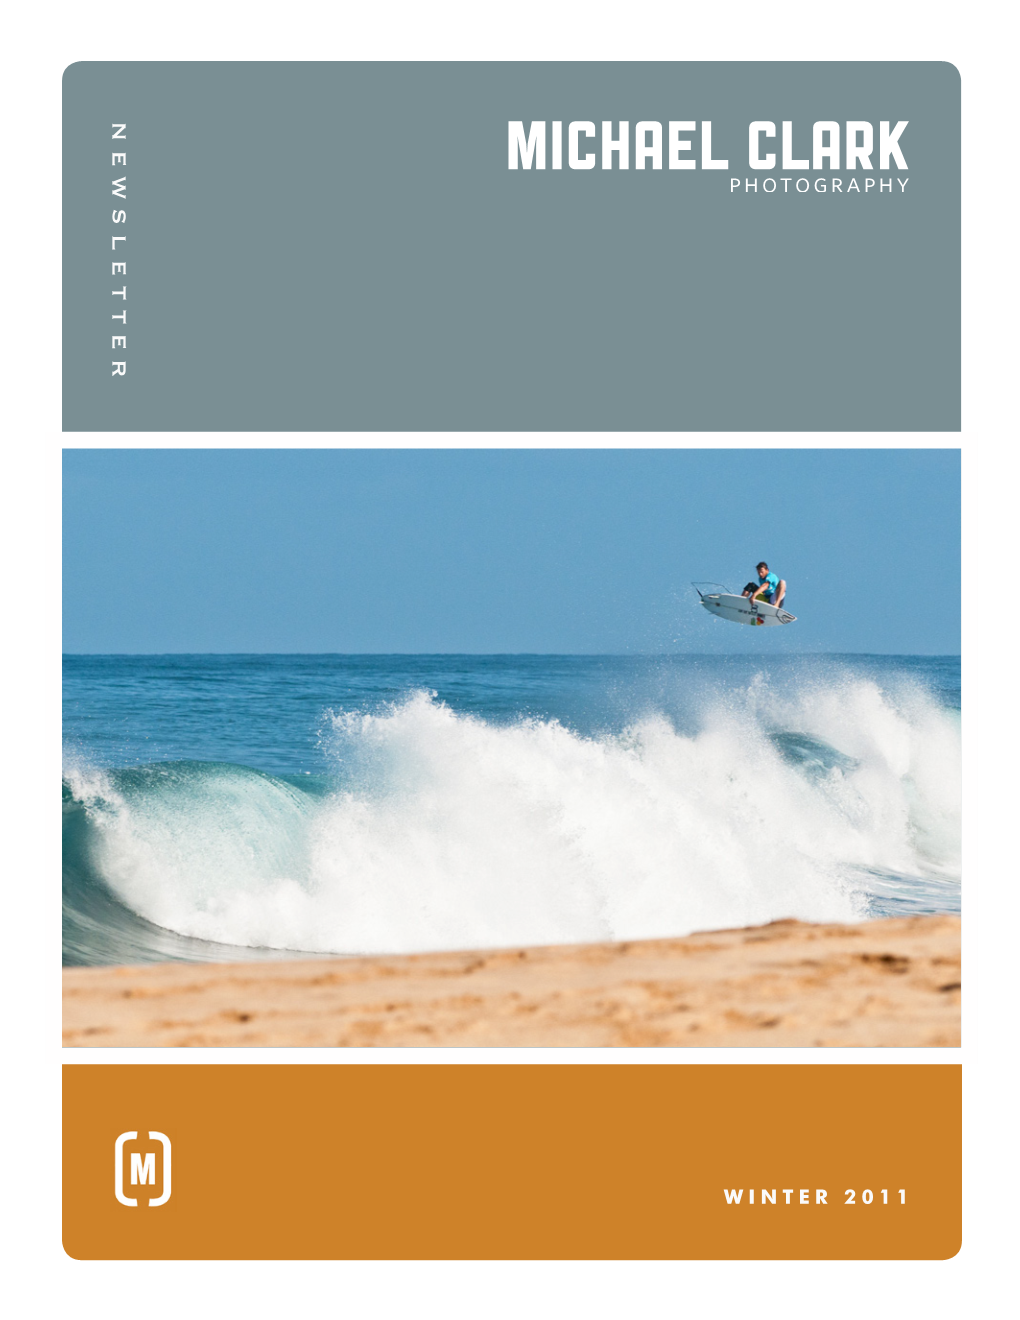 Michael Clark Photography Winter 2011 Newsletter